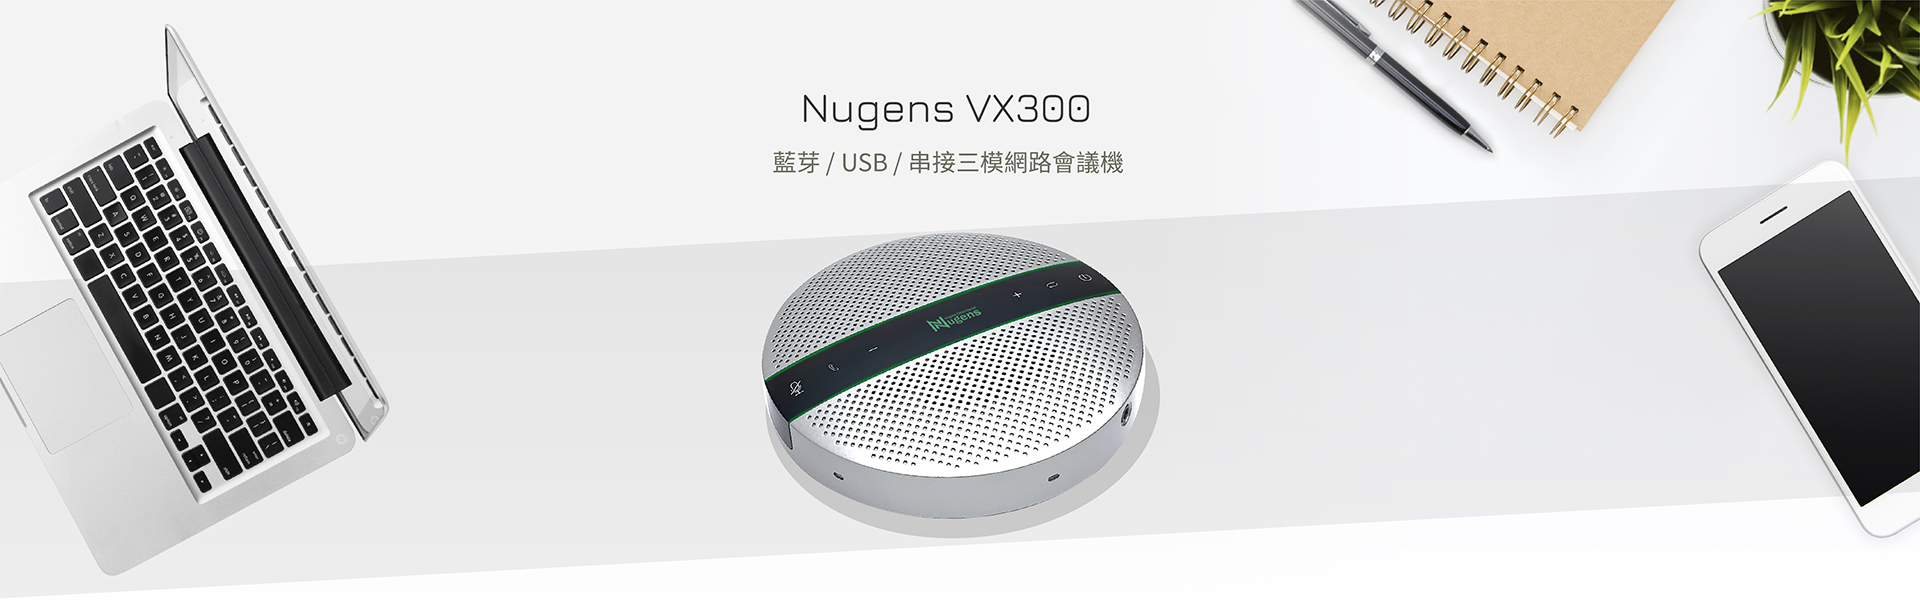 Nugens VX300 藍芽USB串接三模網路會議機情境圖